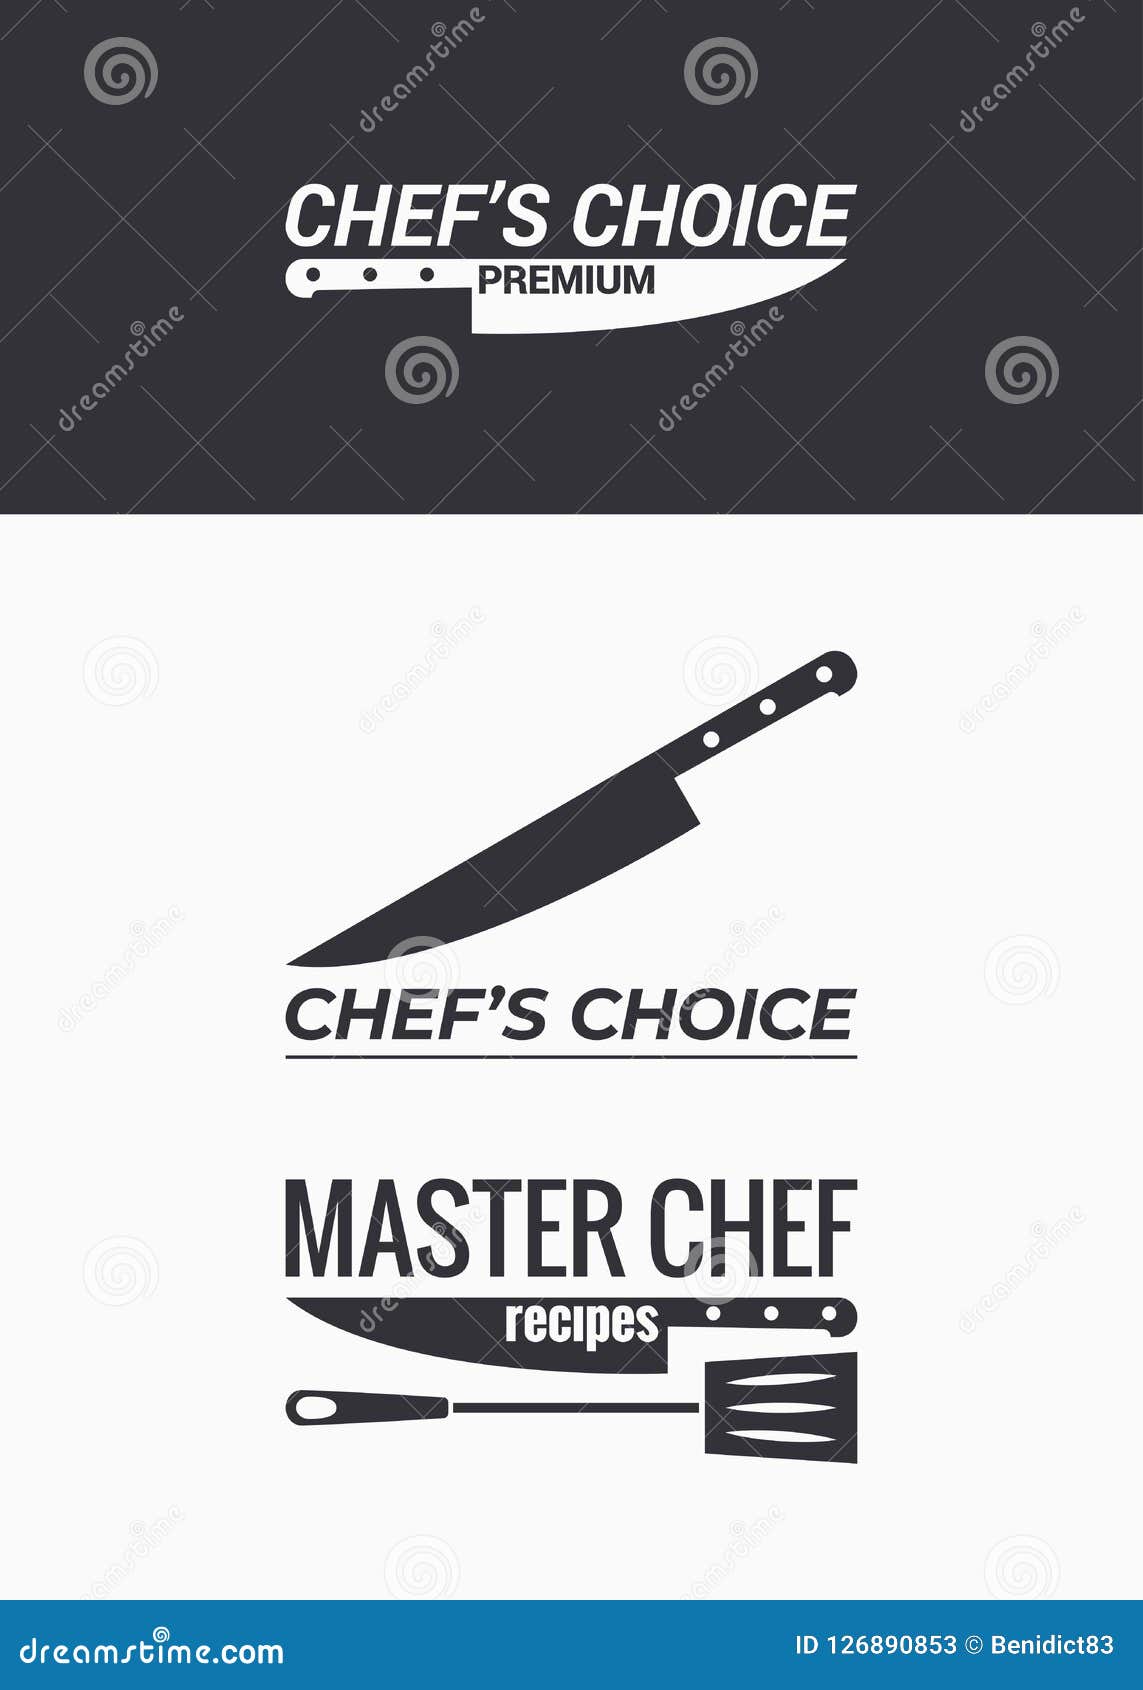 Chef Knife On Chopping Board Vector Illustration | CartoonDealer.com ...